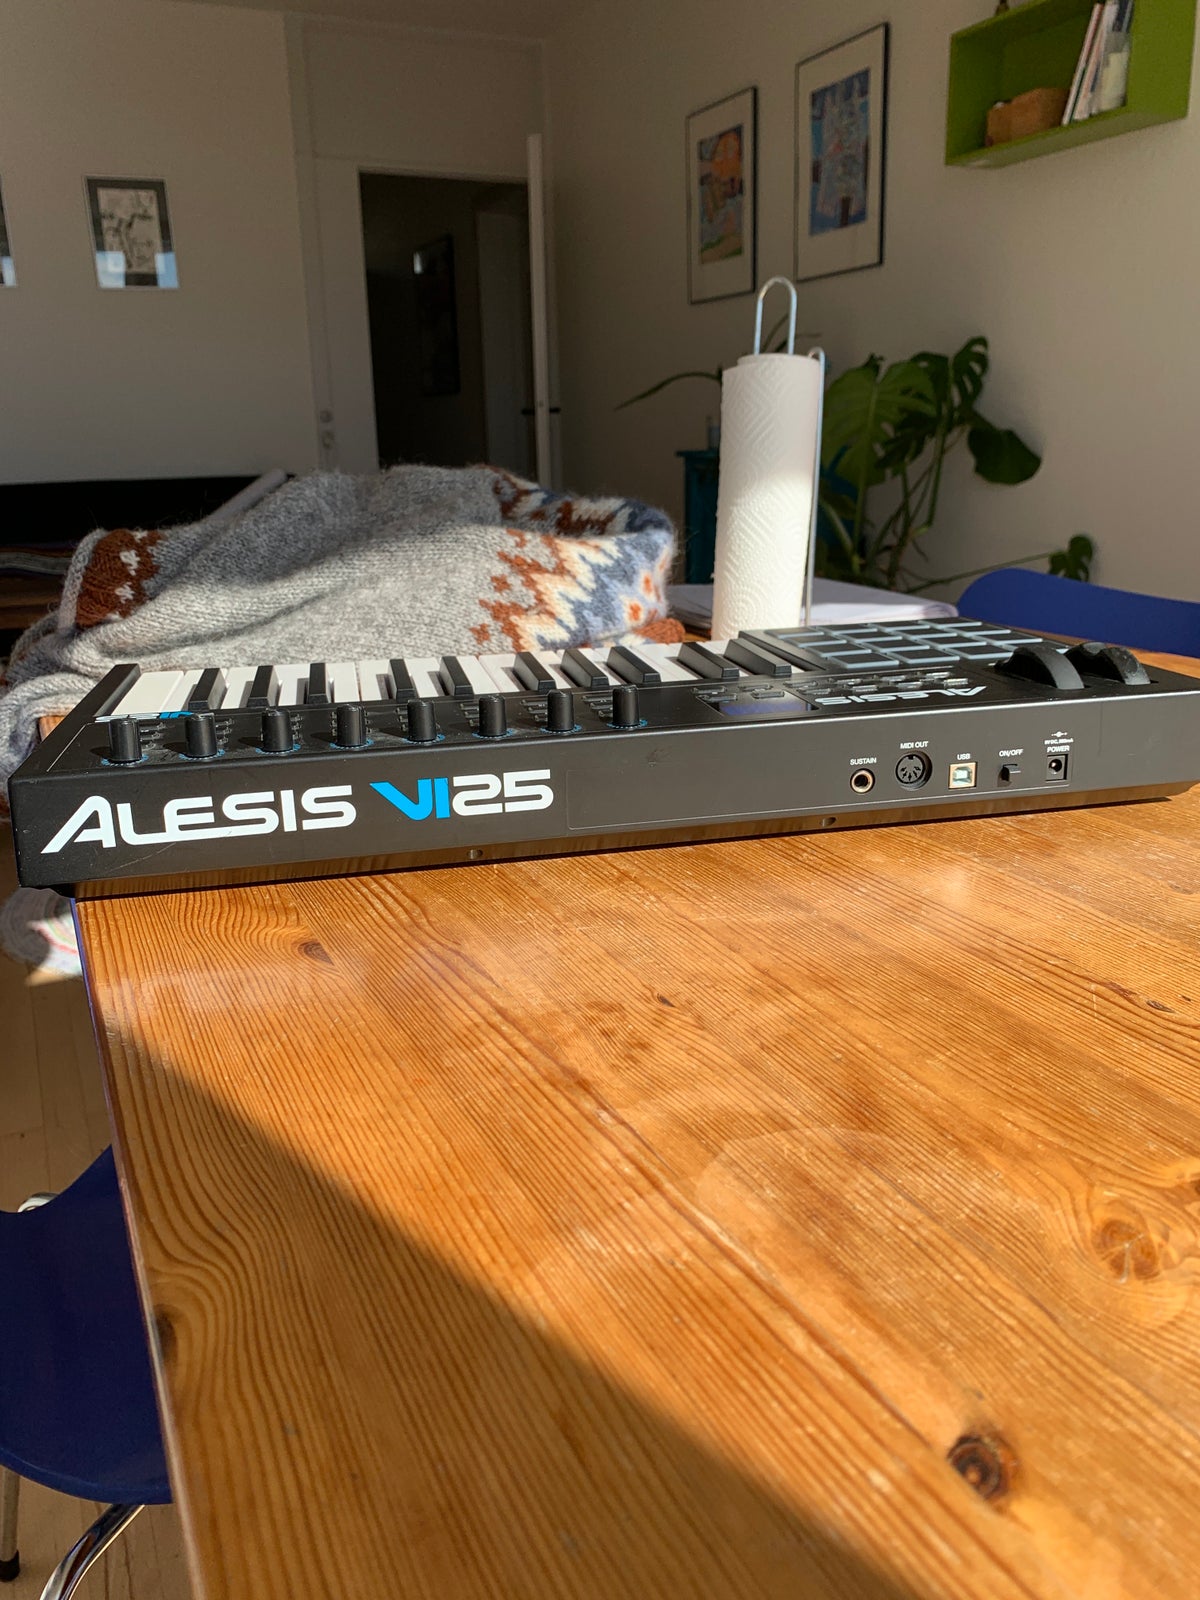 Midi keyboard, Alesis VI25